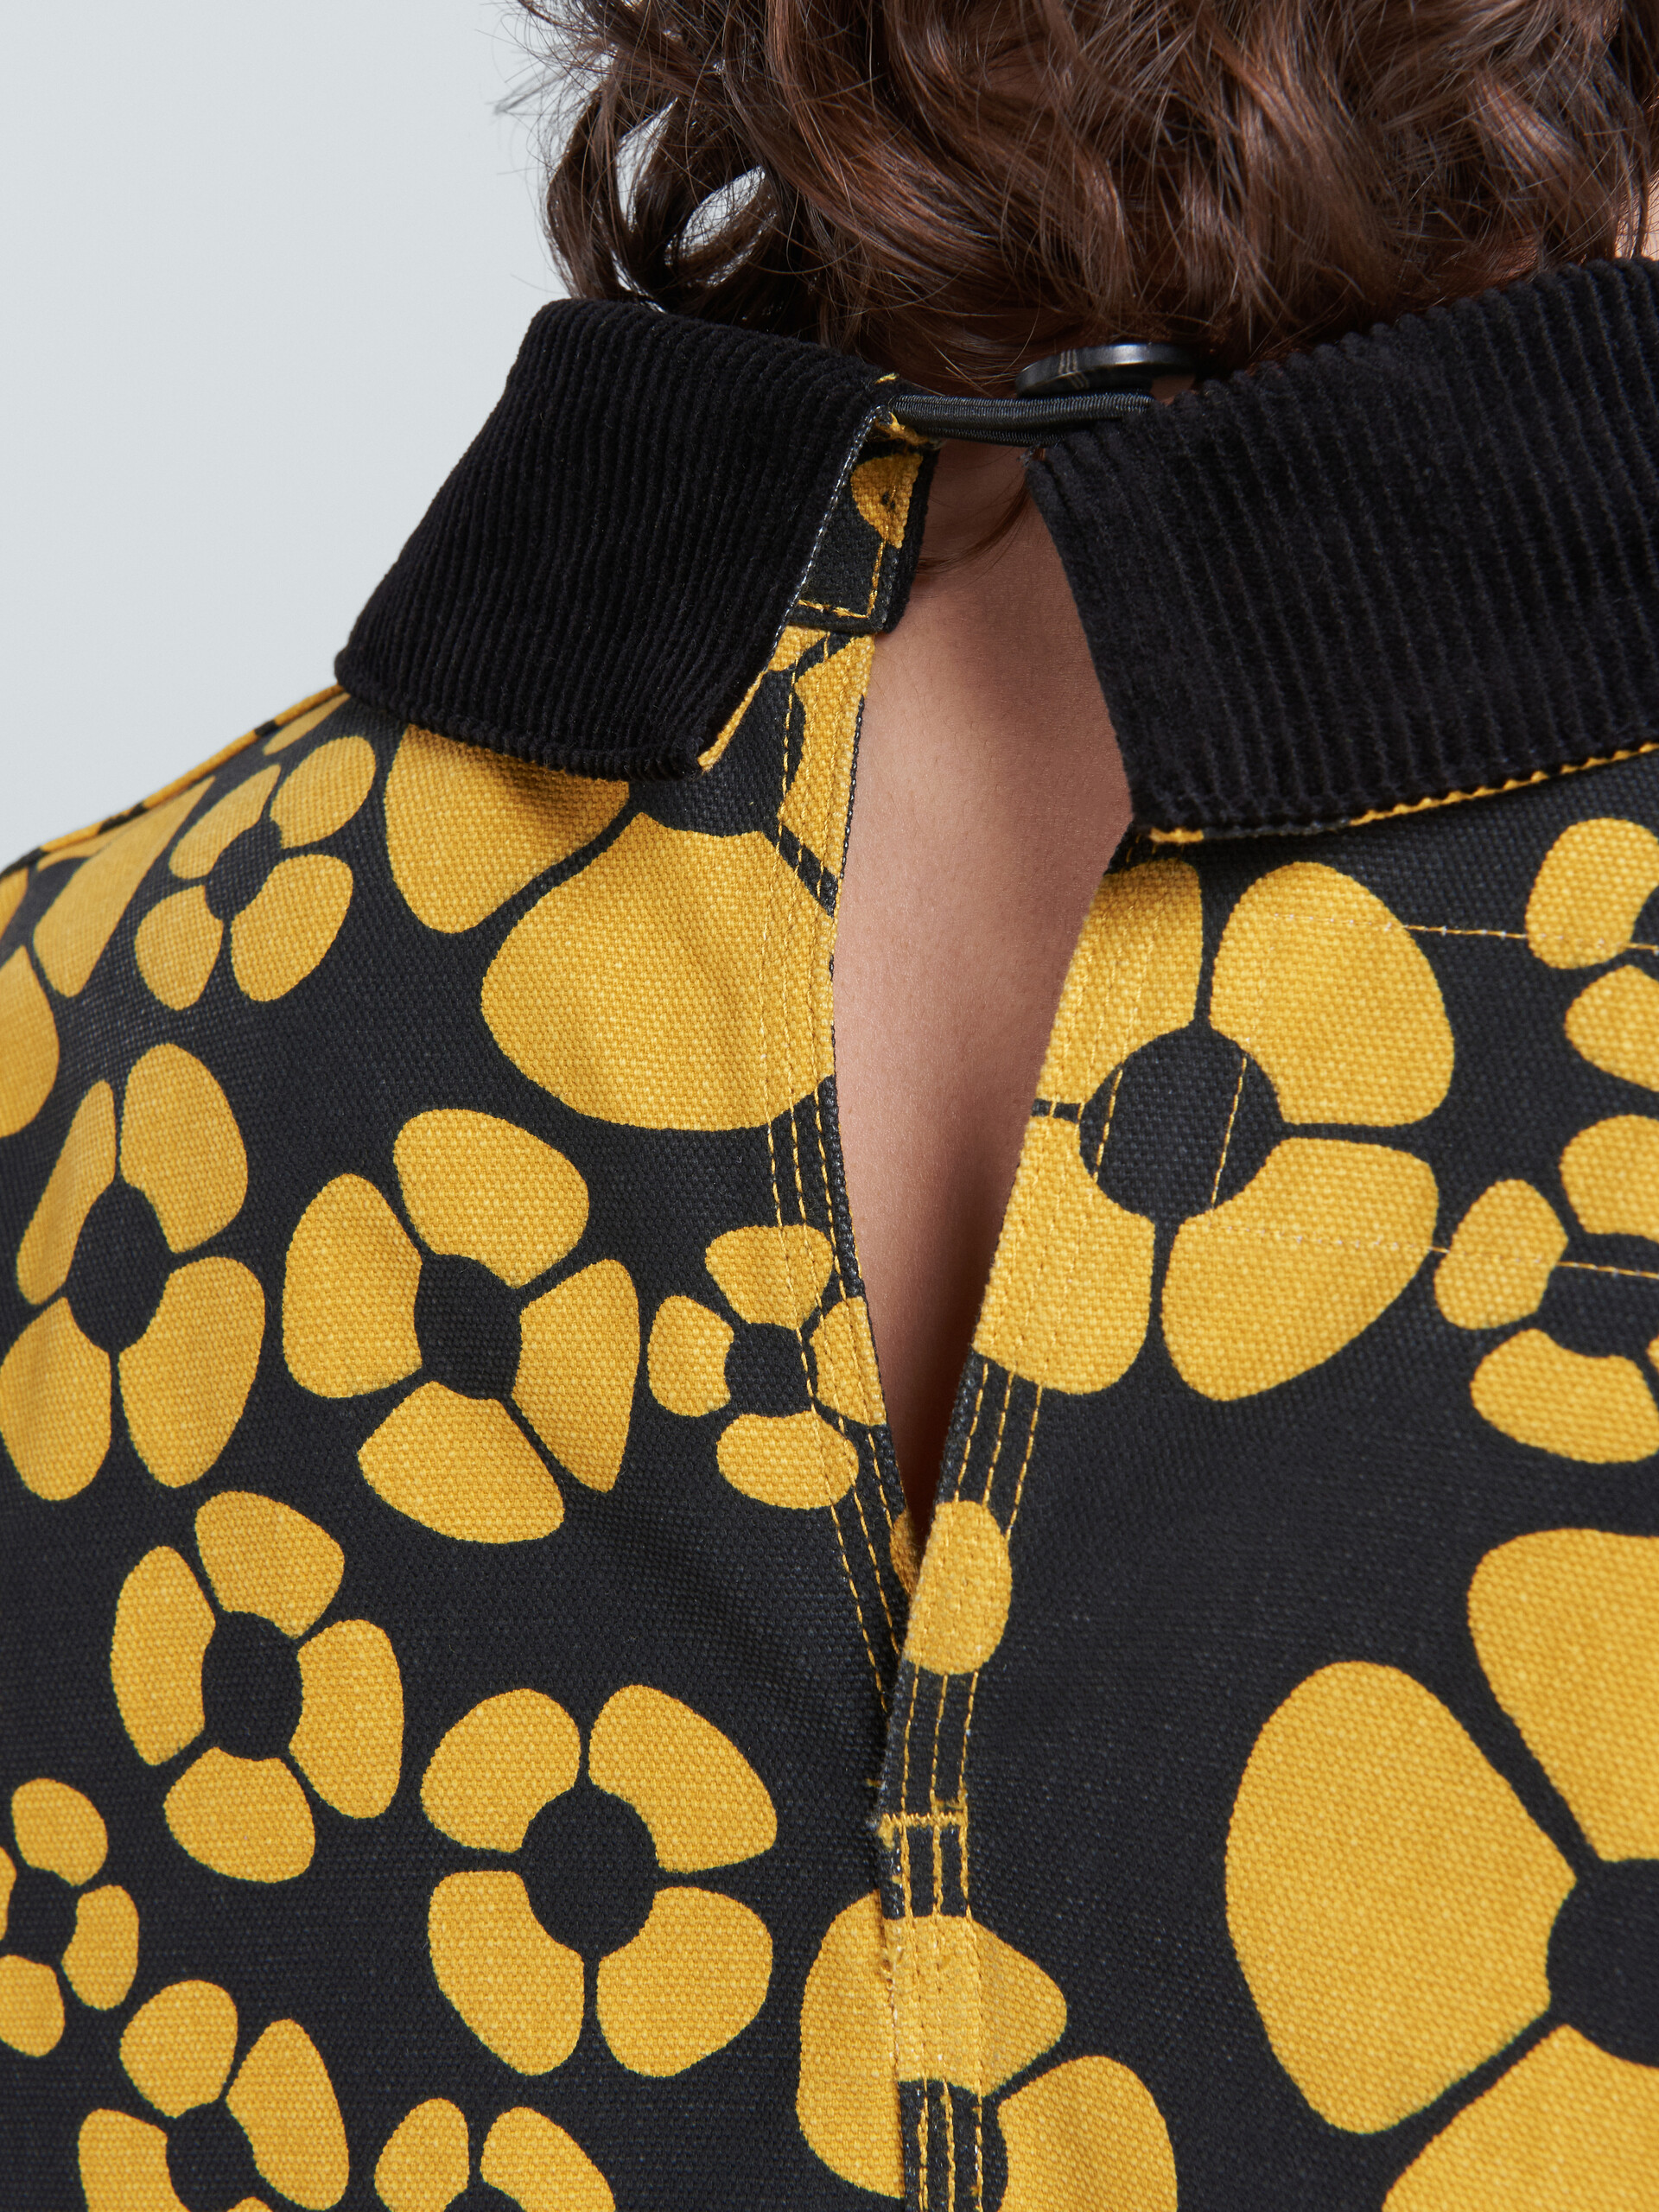 MARNI x CARHARTT WIP - yellow oversized jacket - Jackets - Image 5